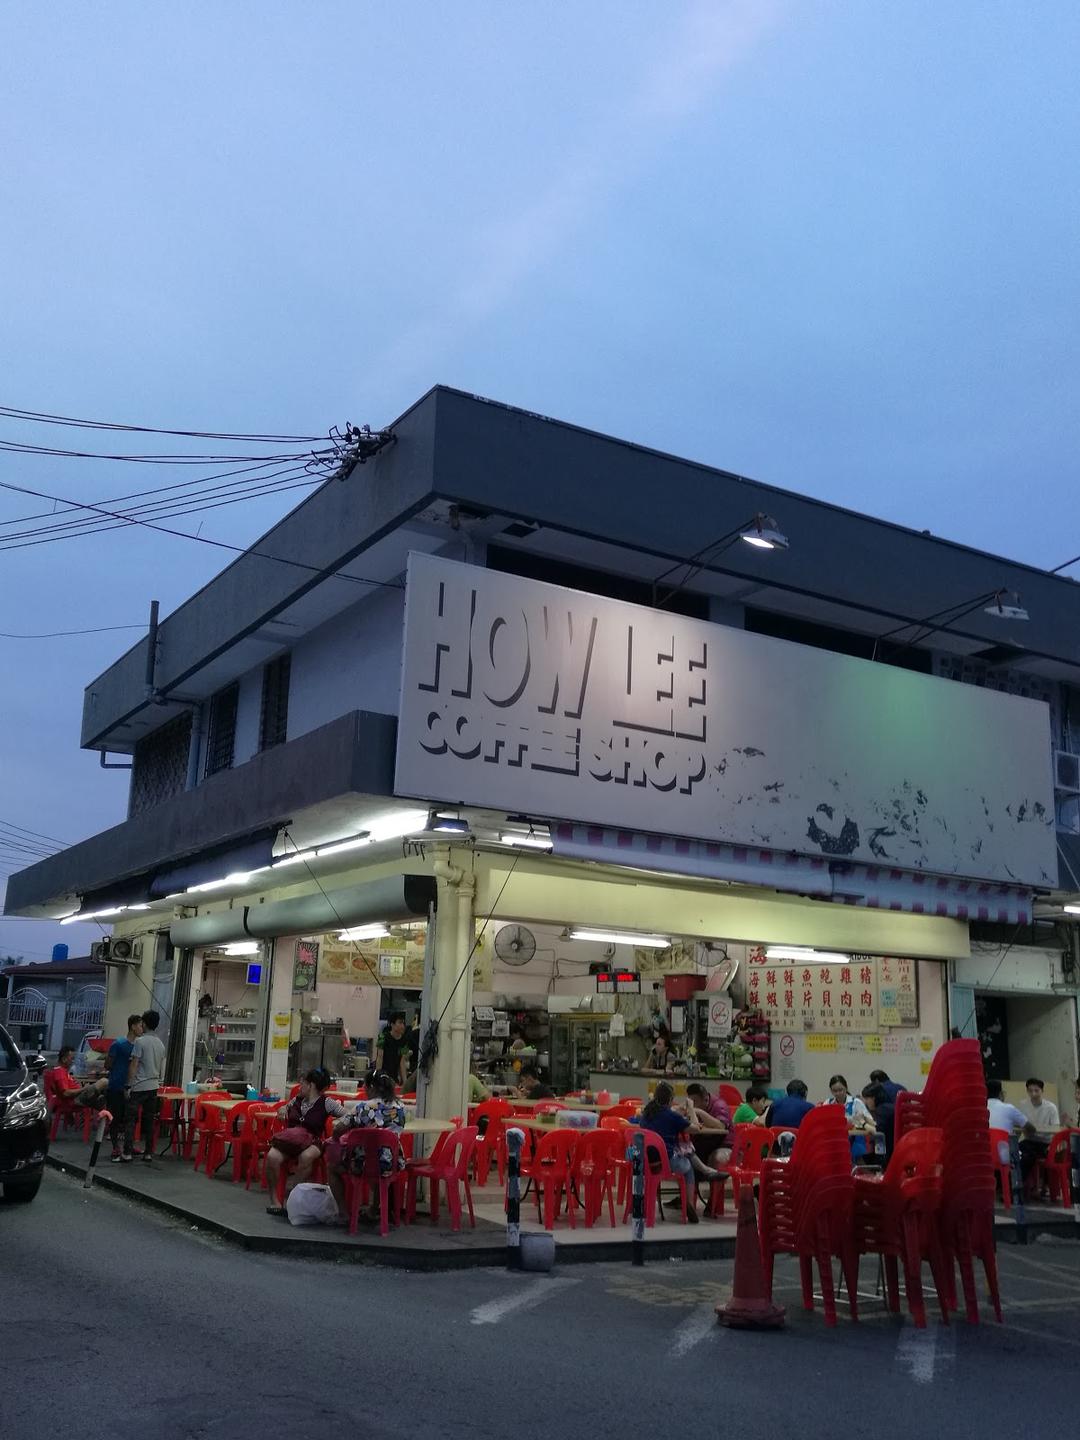 Photo of How Lee Coffee Shop - Kota Kinabalu, Sabah, Malaysia